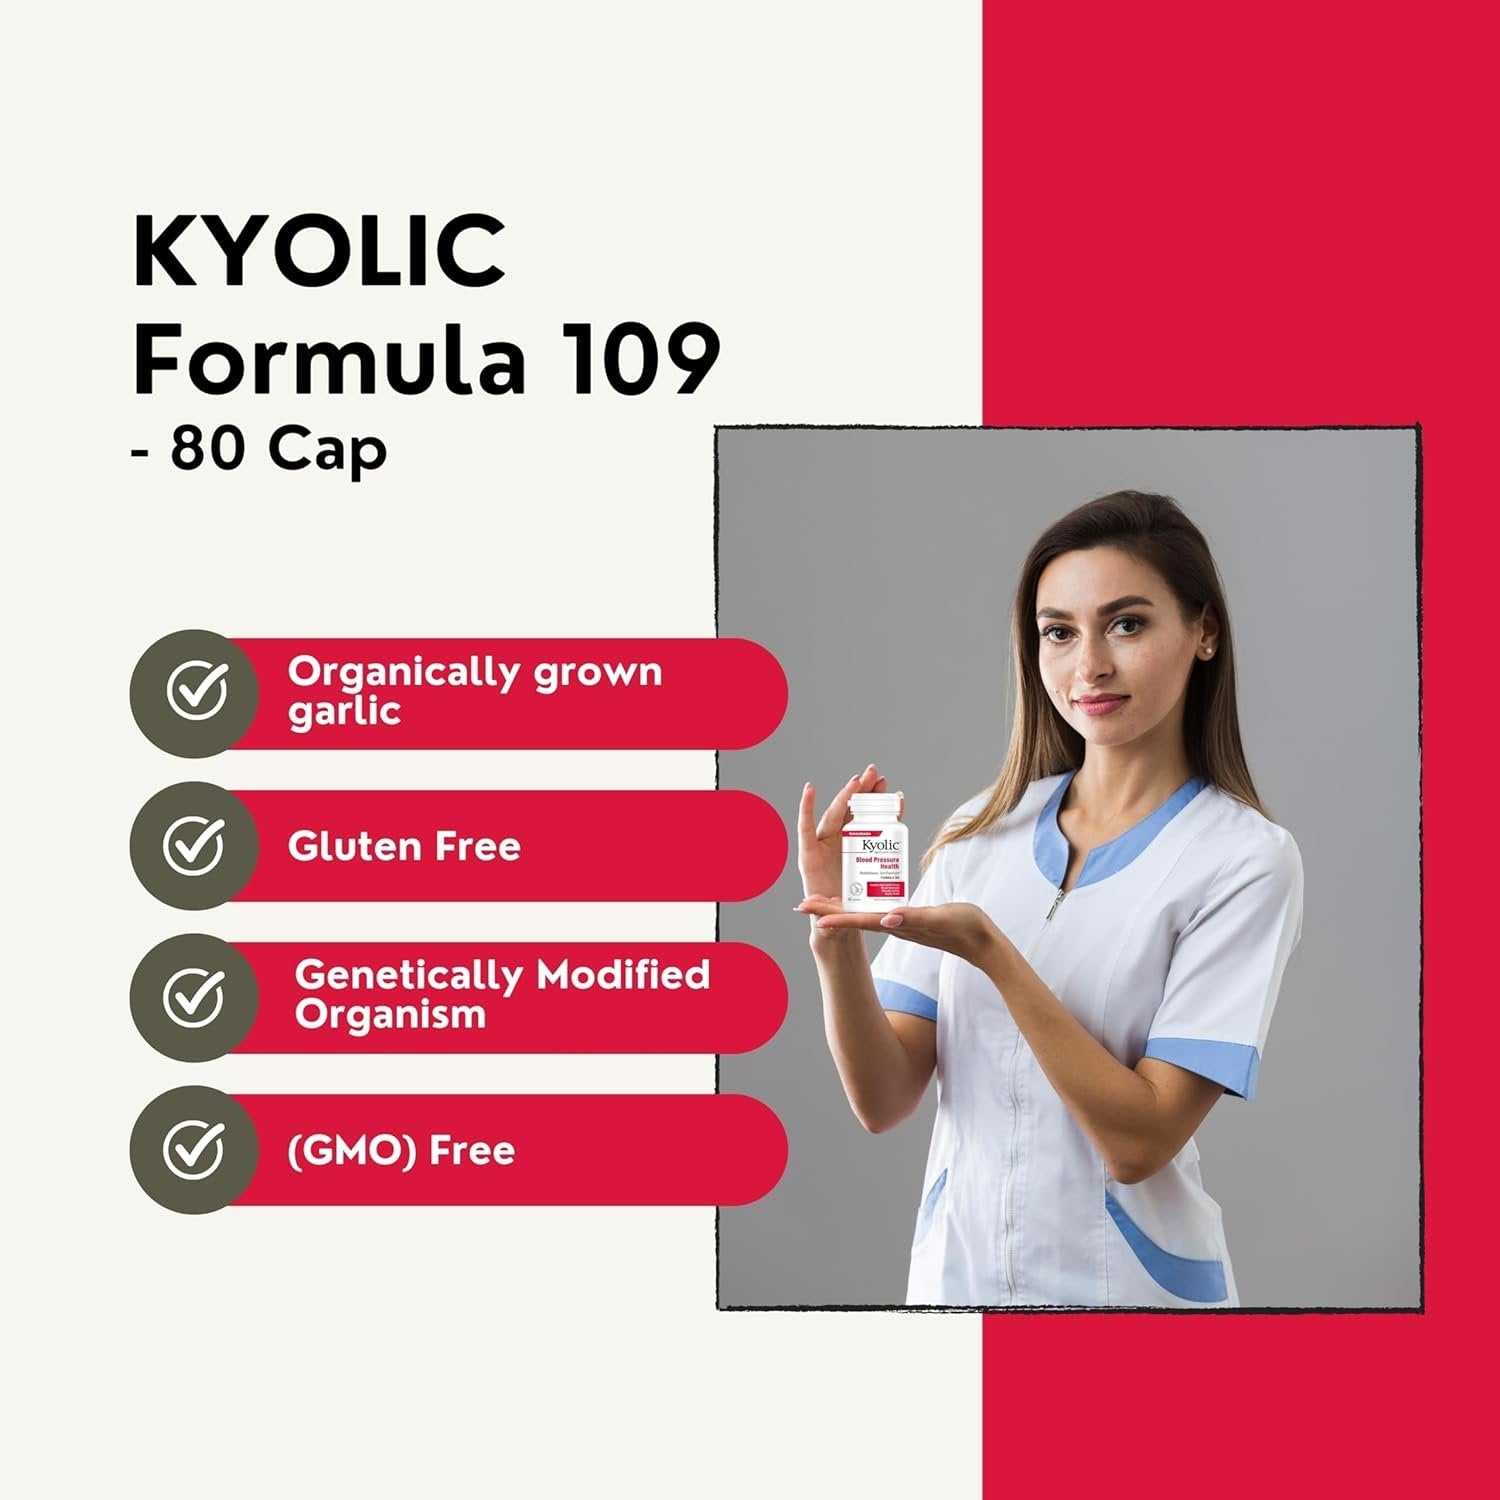 Kyolic Aged Garlic Extract Blood Pressure Health Formula 109 - Organic Garlic Supplement Odorless and Non-GMO 80 Capsules with Multi-Purpose Key Chain